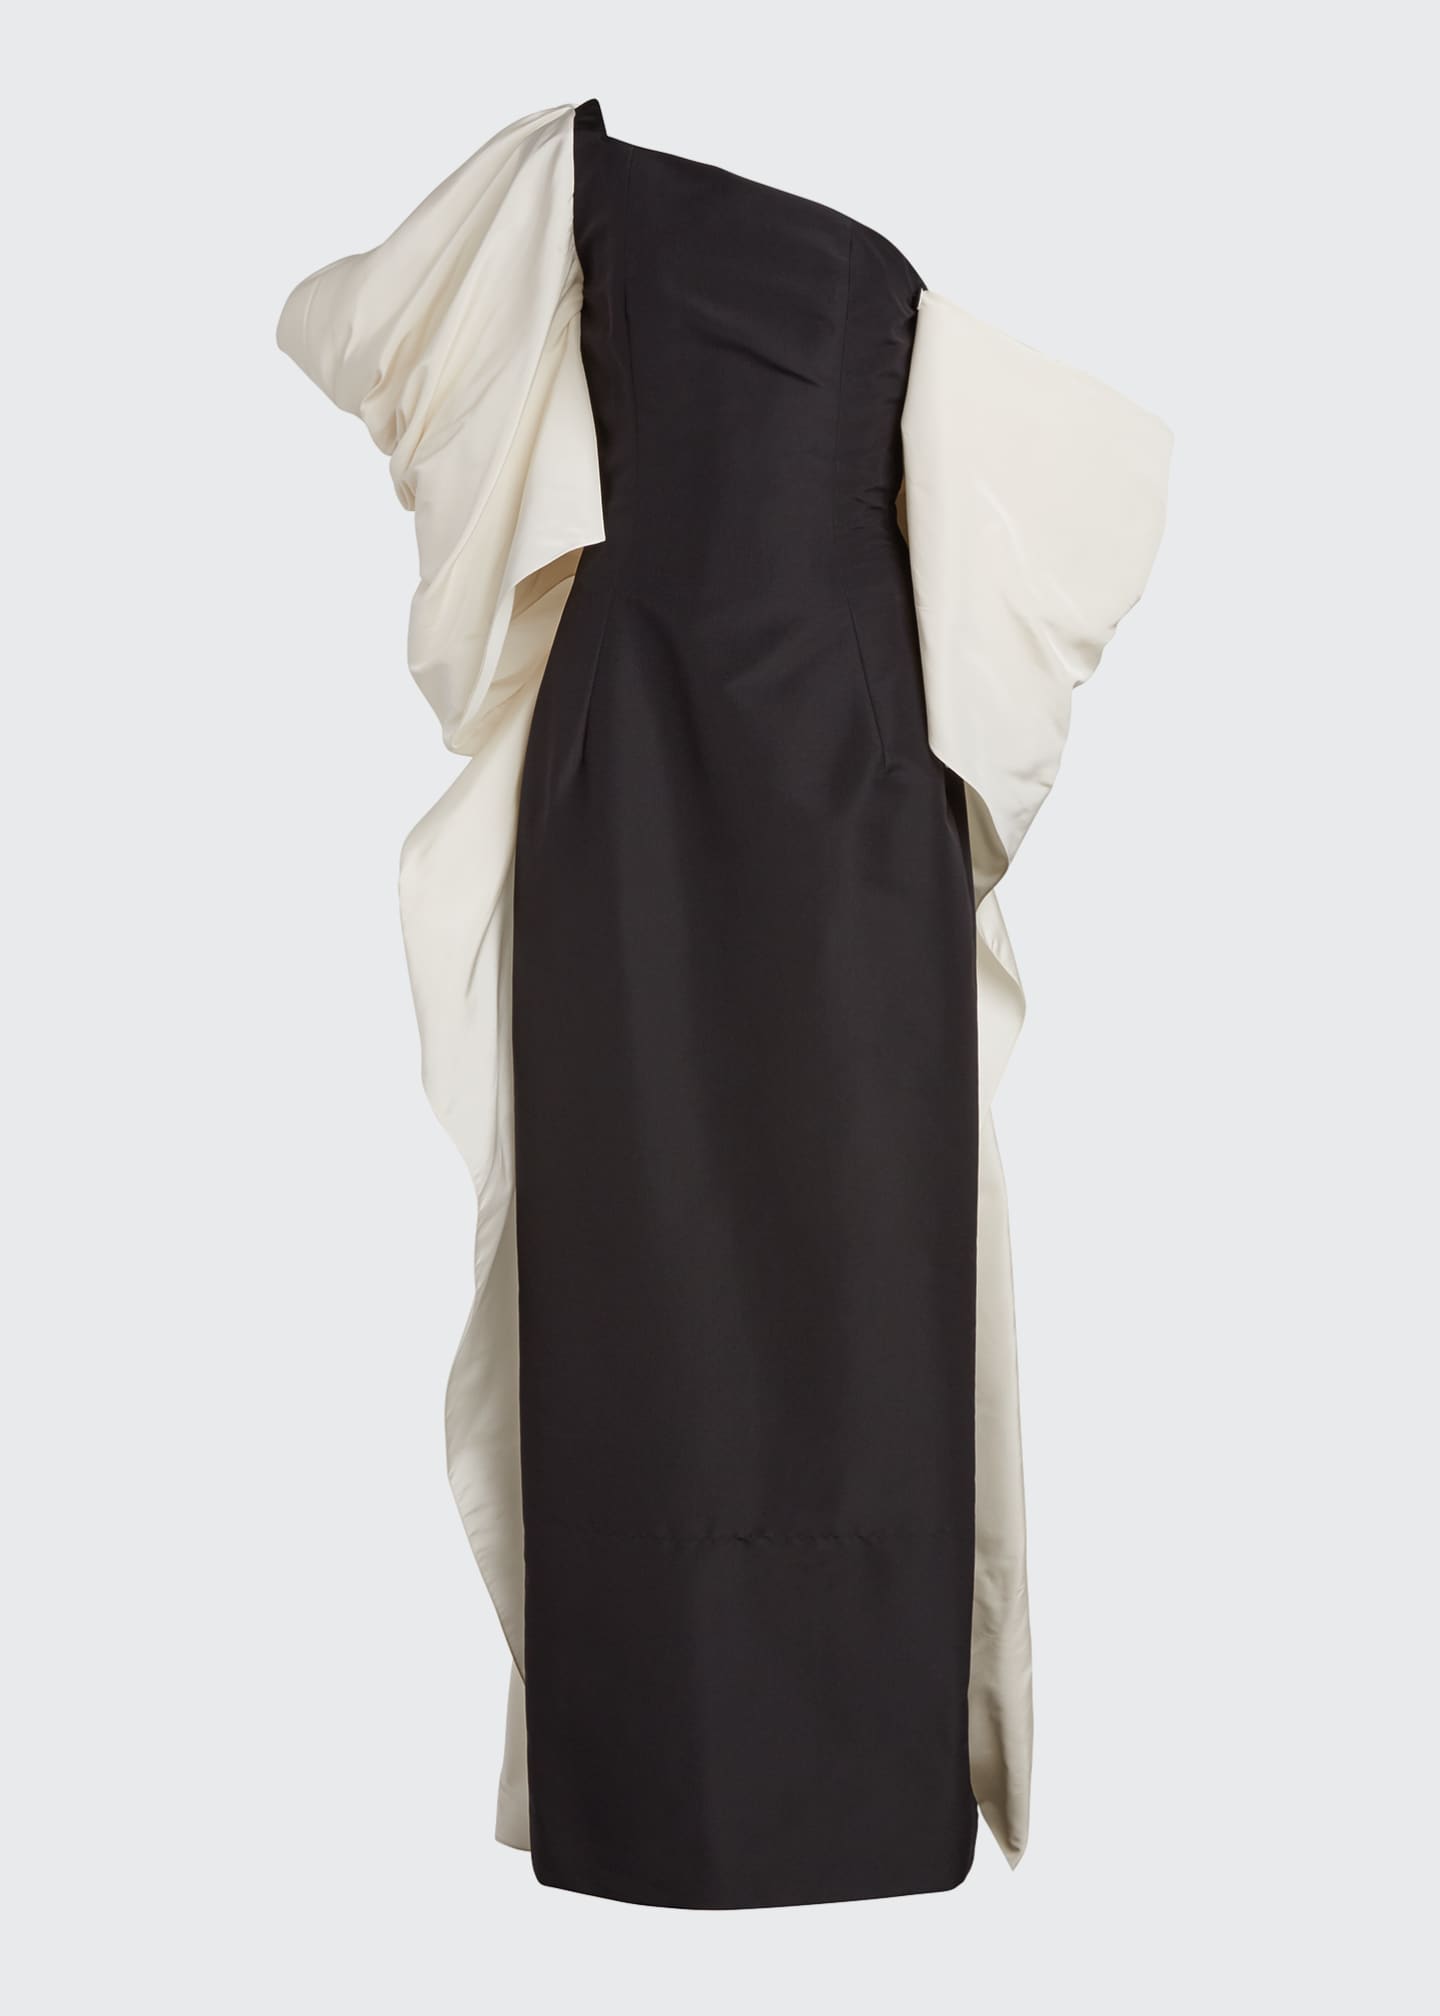 Carolina Herrera Dramatic Bow Column Gown - Bergdorf Goodman